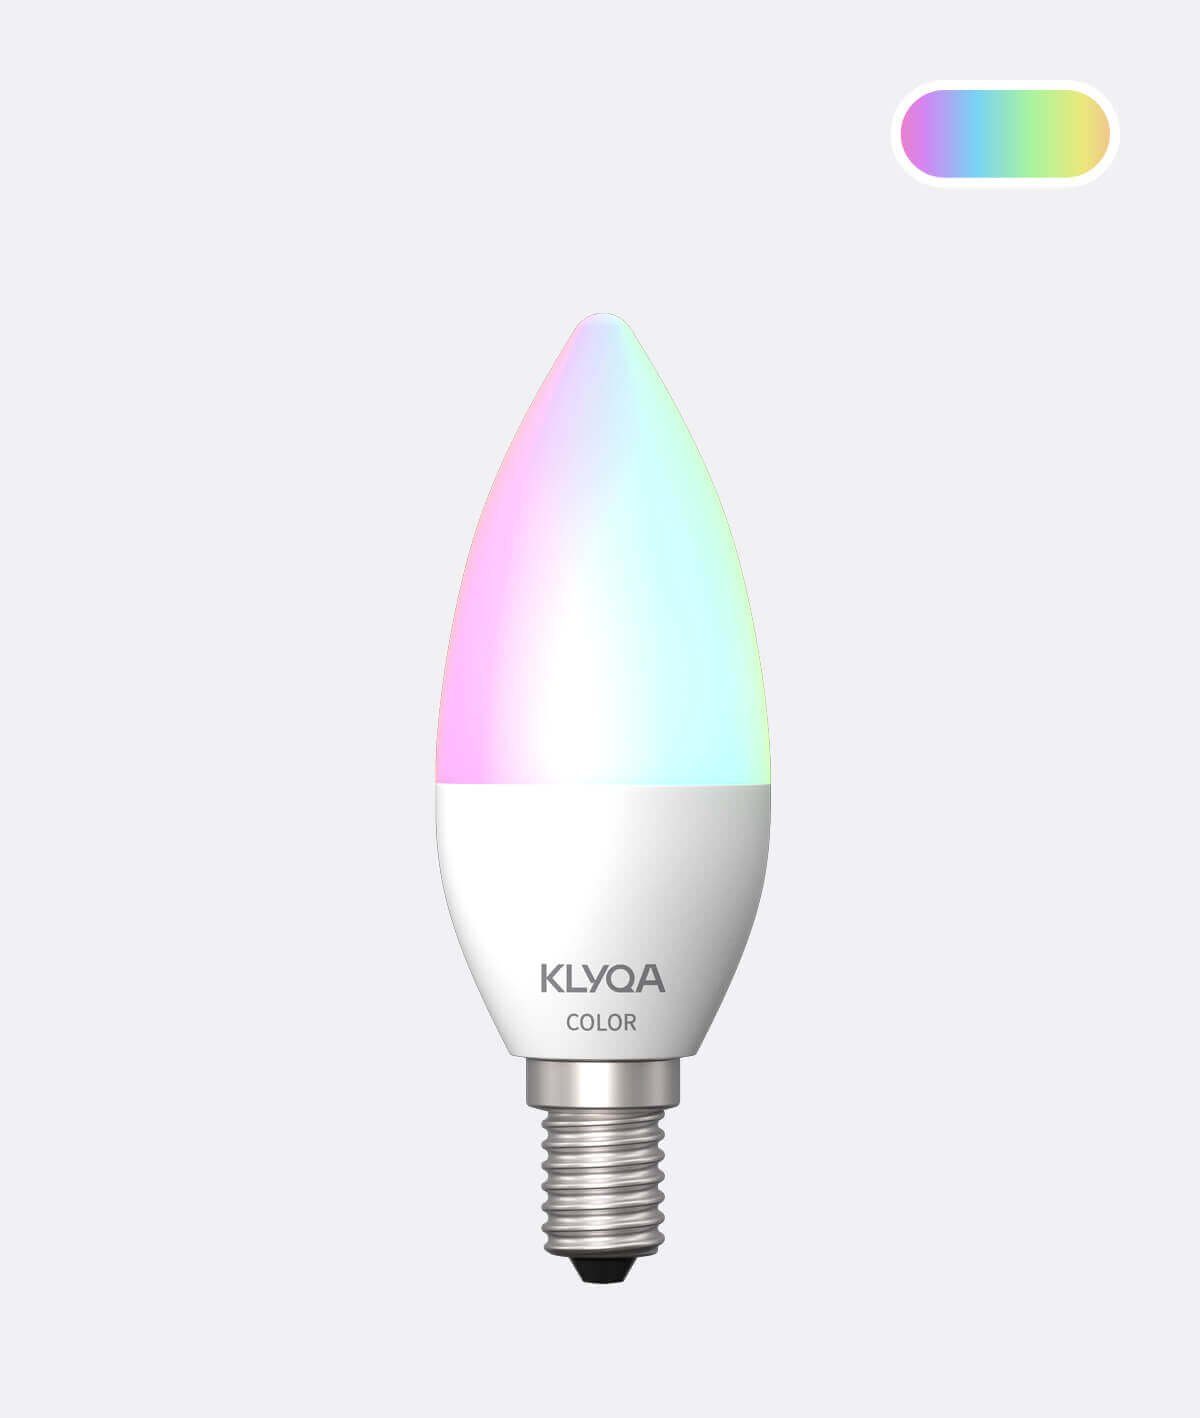 Klyqa KL-E14C Smarte Lampe, mehrfarbig, stufenlose Weißtöne, kompatibel mit Alexa